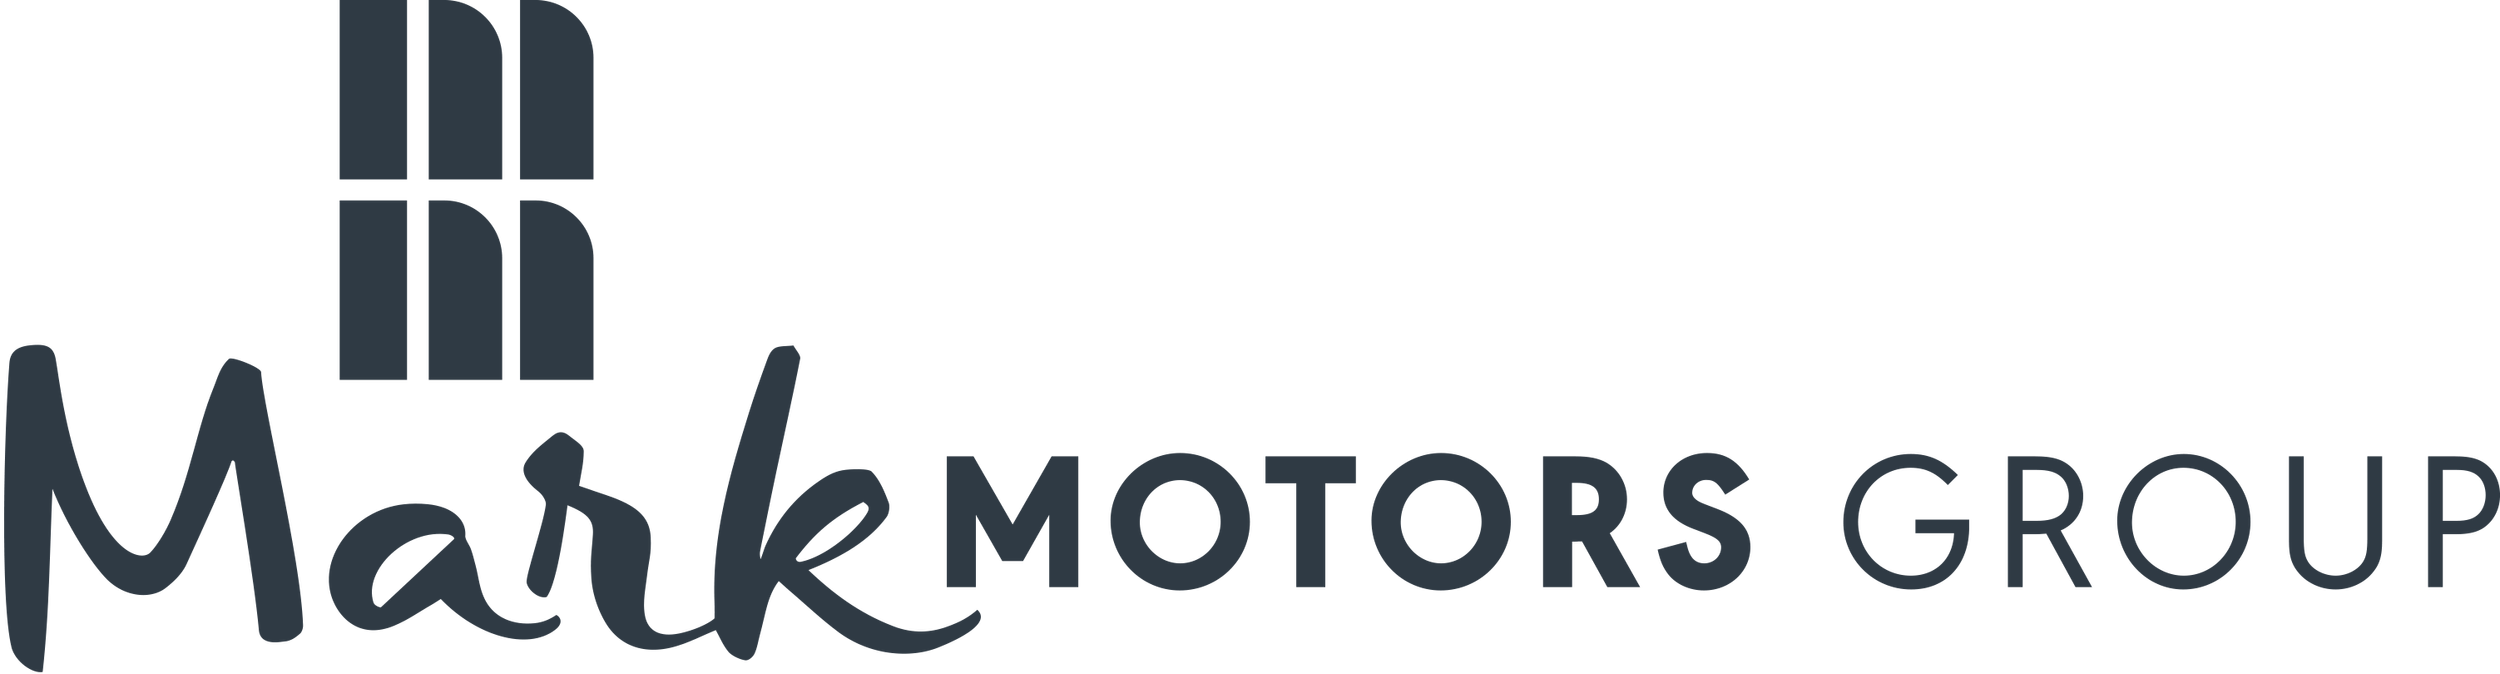 Mark Motors Group logo.png